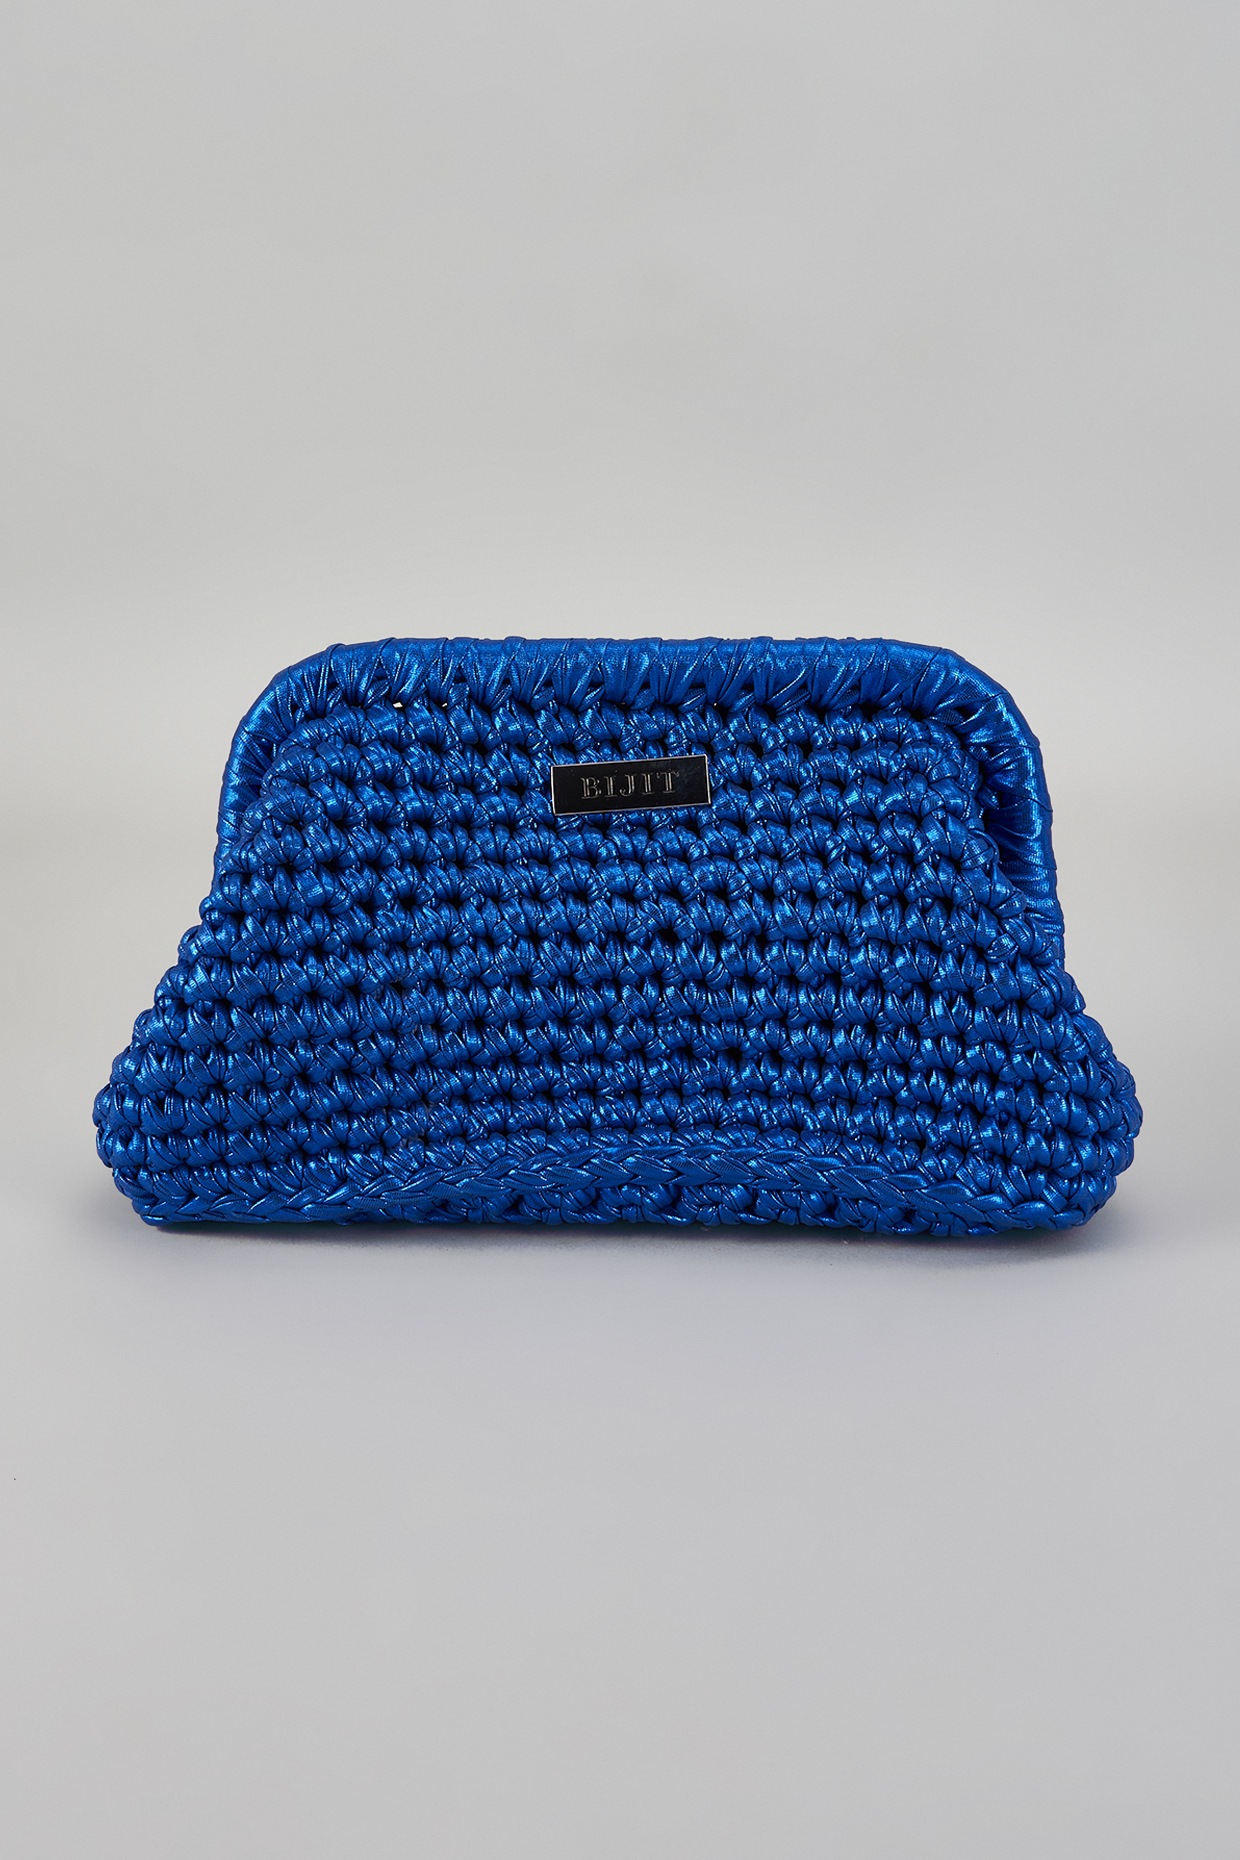 Manhattan Bag - Electric Blue Leather | DANNI RO | Wolf & Badger